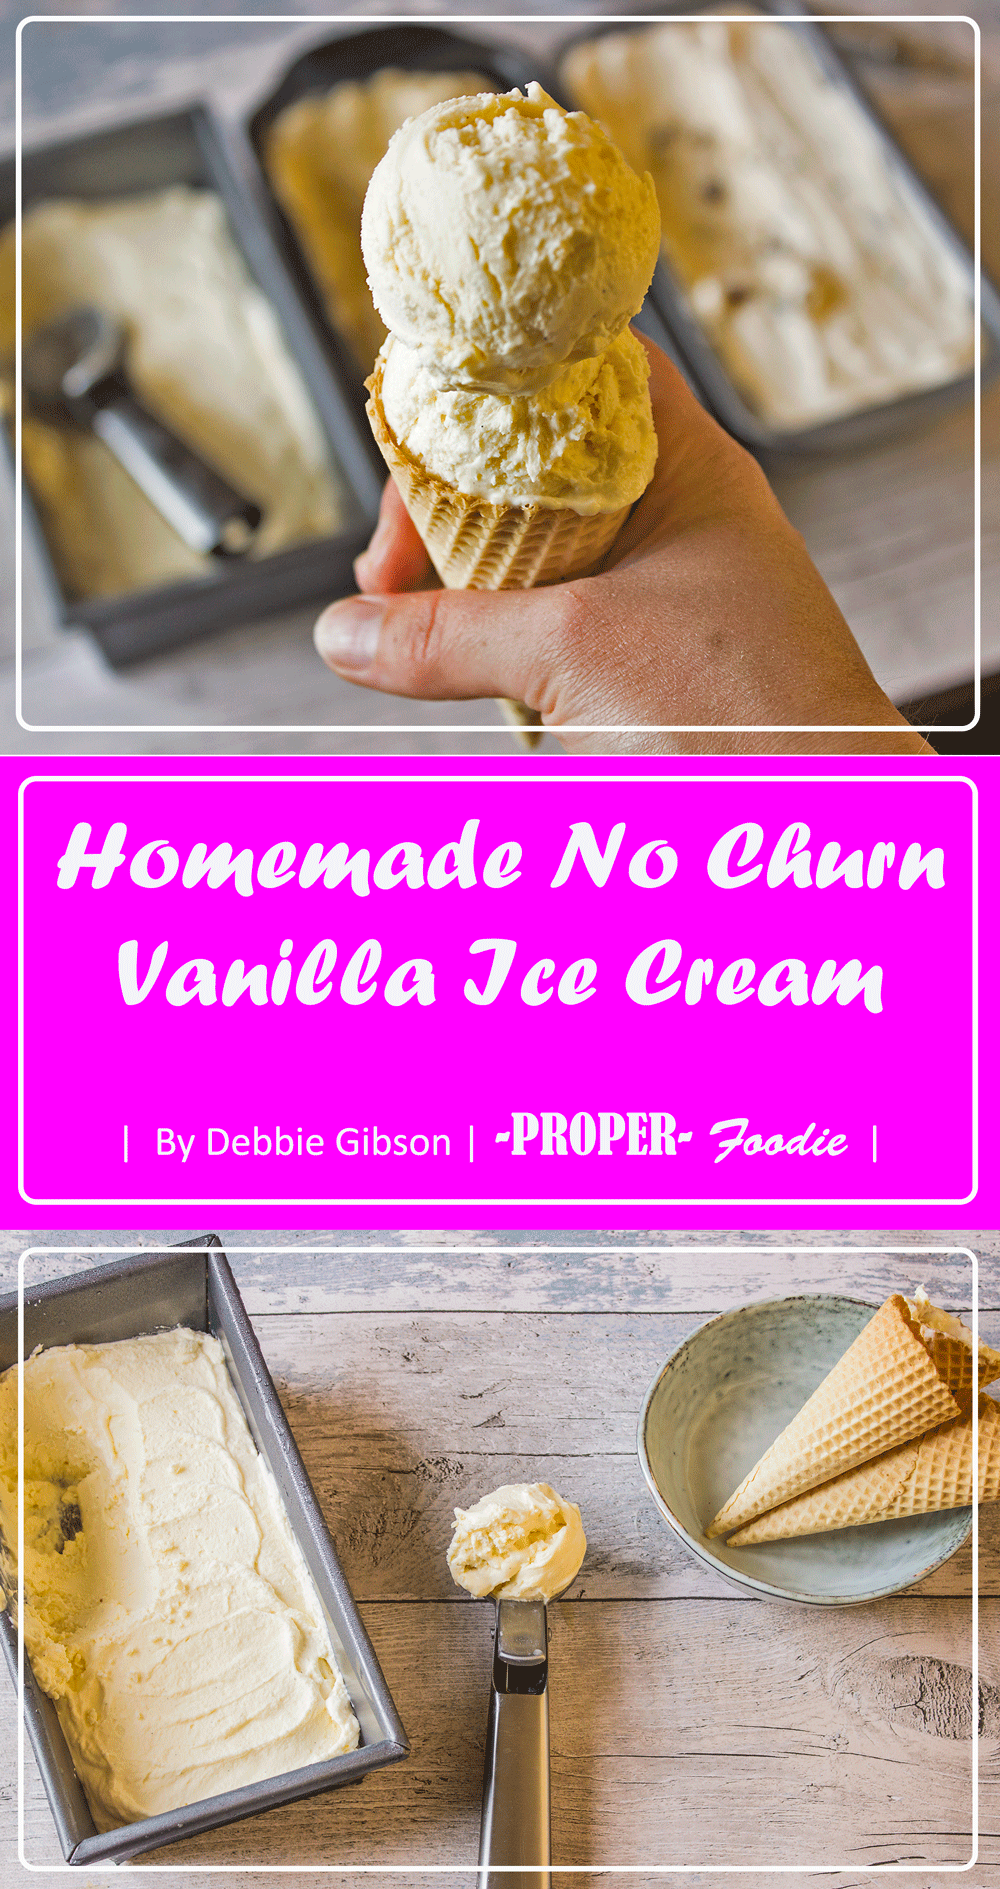 Creamy, homemade vanilla ice cream, no churn and simple to make